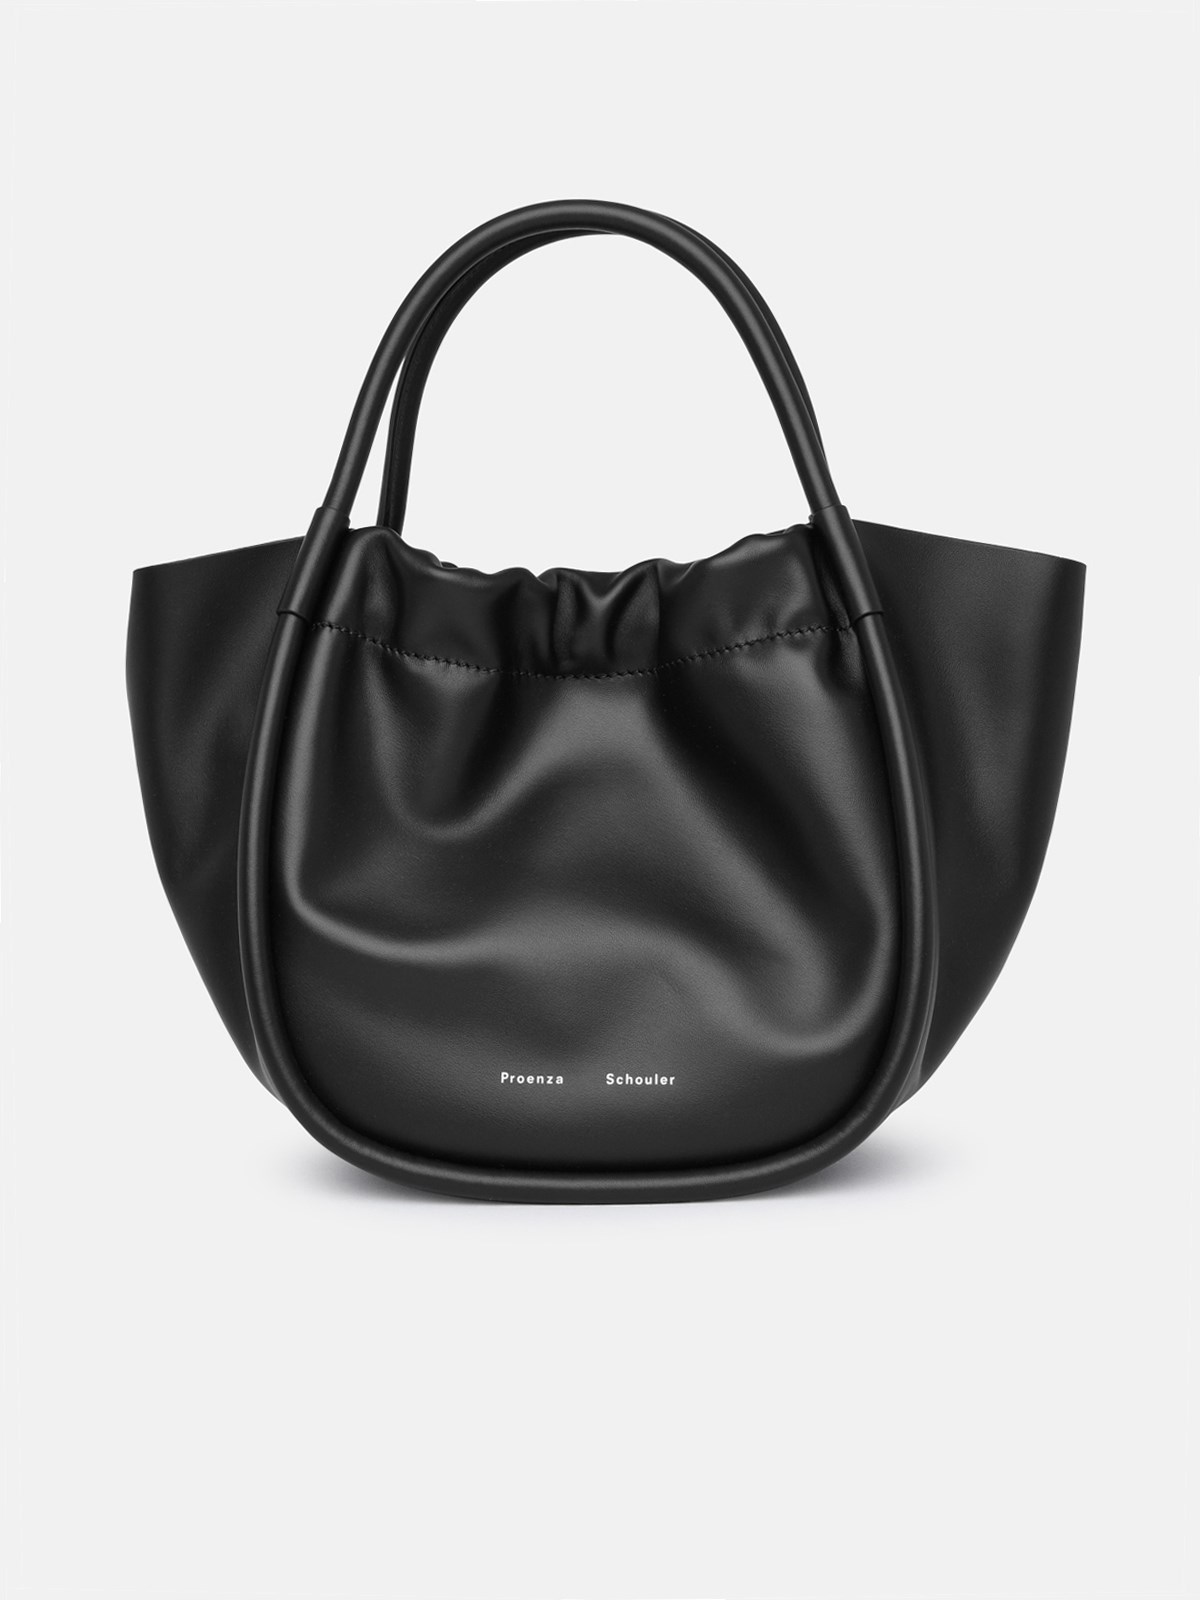 Proenza Schouler Black Leather Ruched Bag